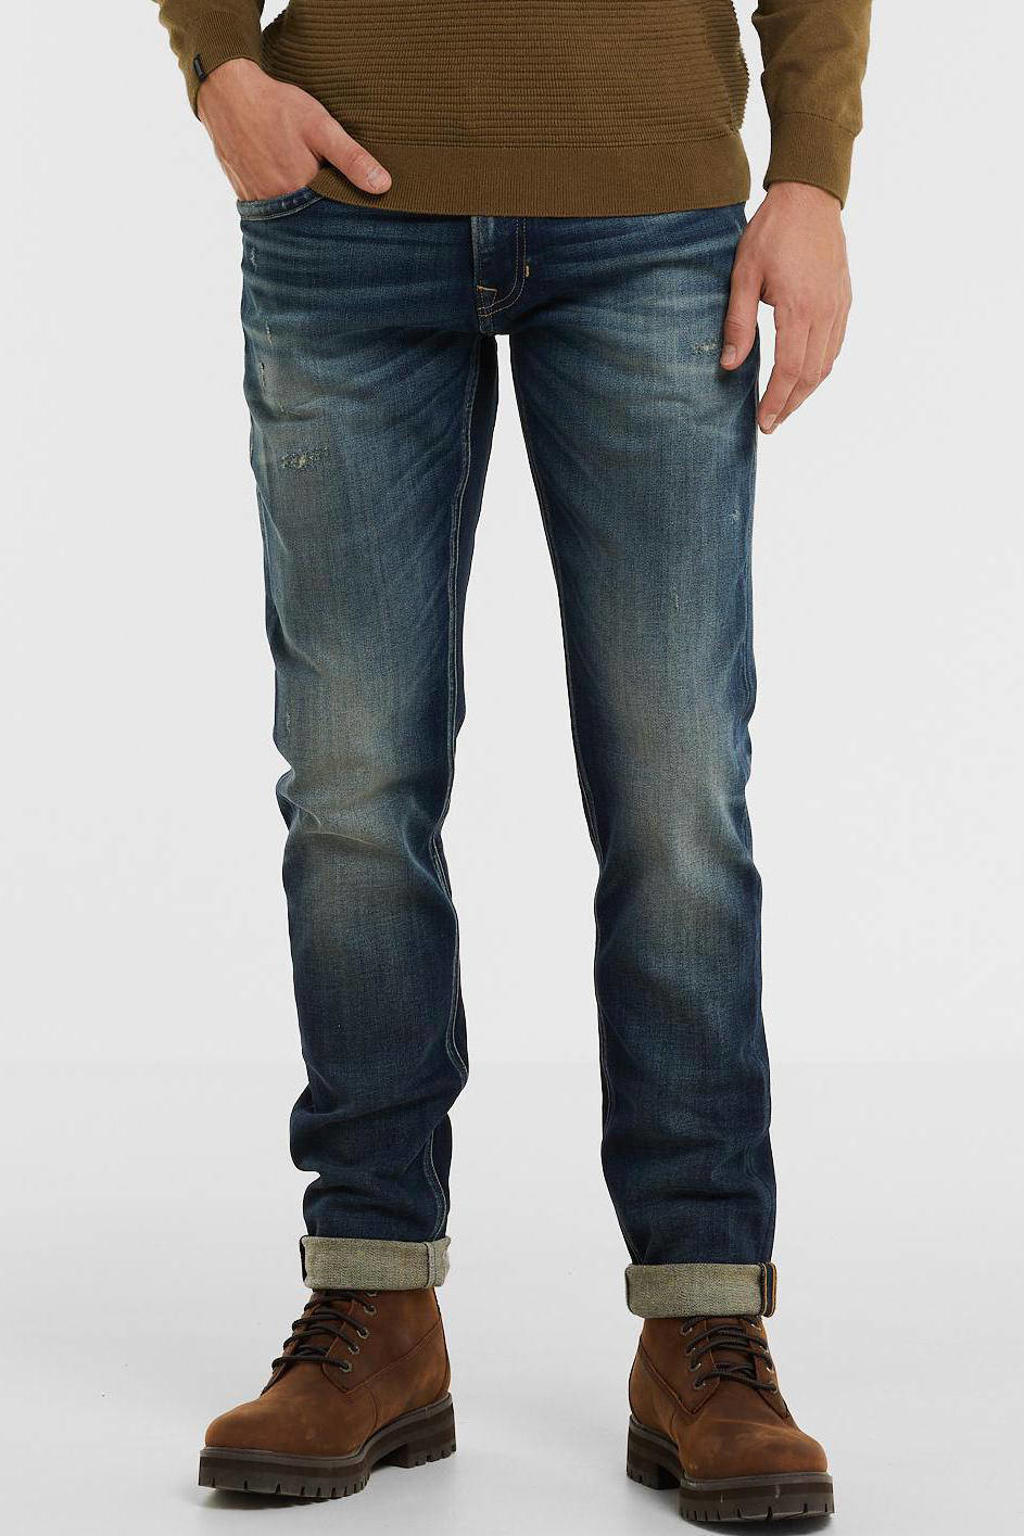 PME Legend slim fit jeans TAILWHEEL vintage denim blue